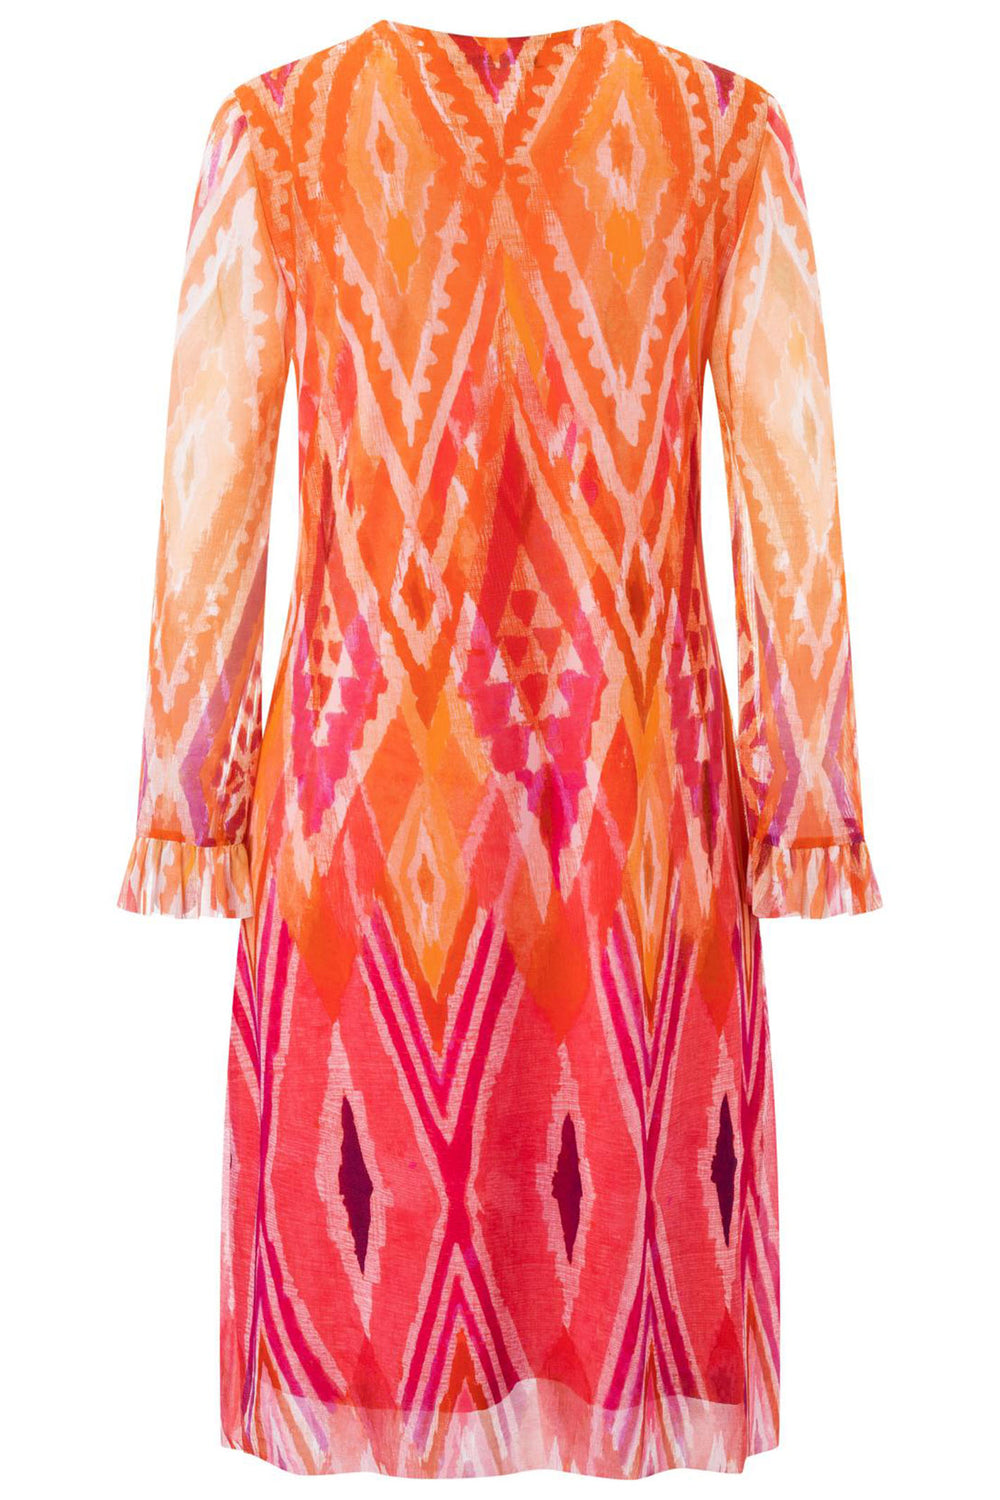 Ana Alcazar 040535 Orange Ikat Print Beaded Neck Short Dress - Olivia Grace Fashion